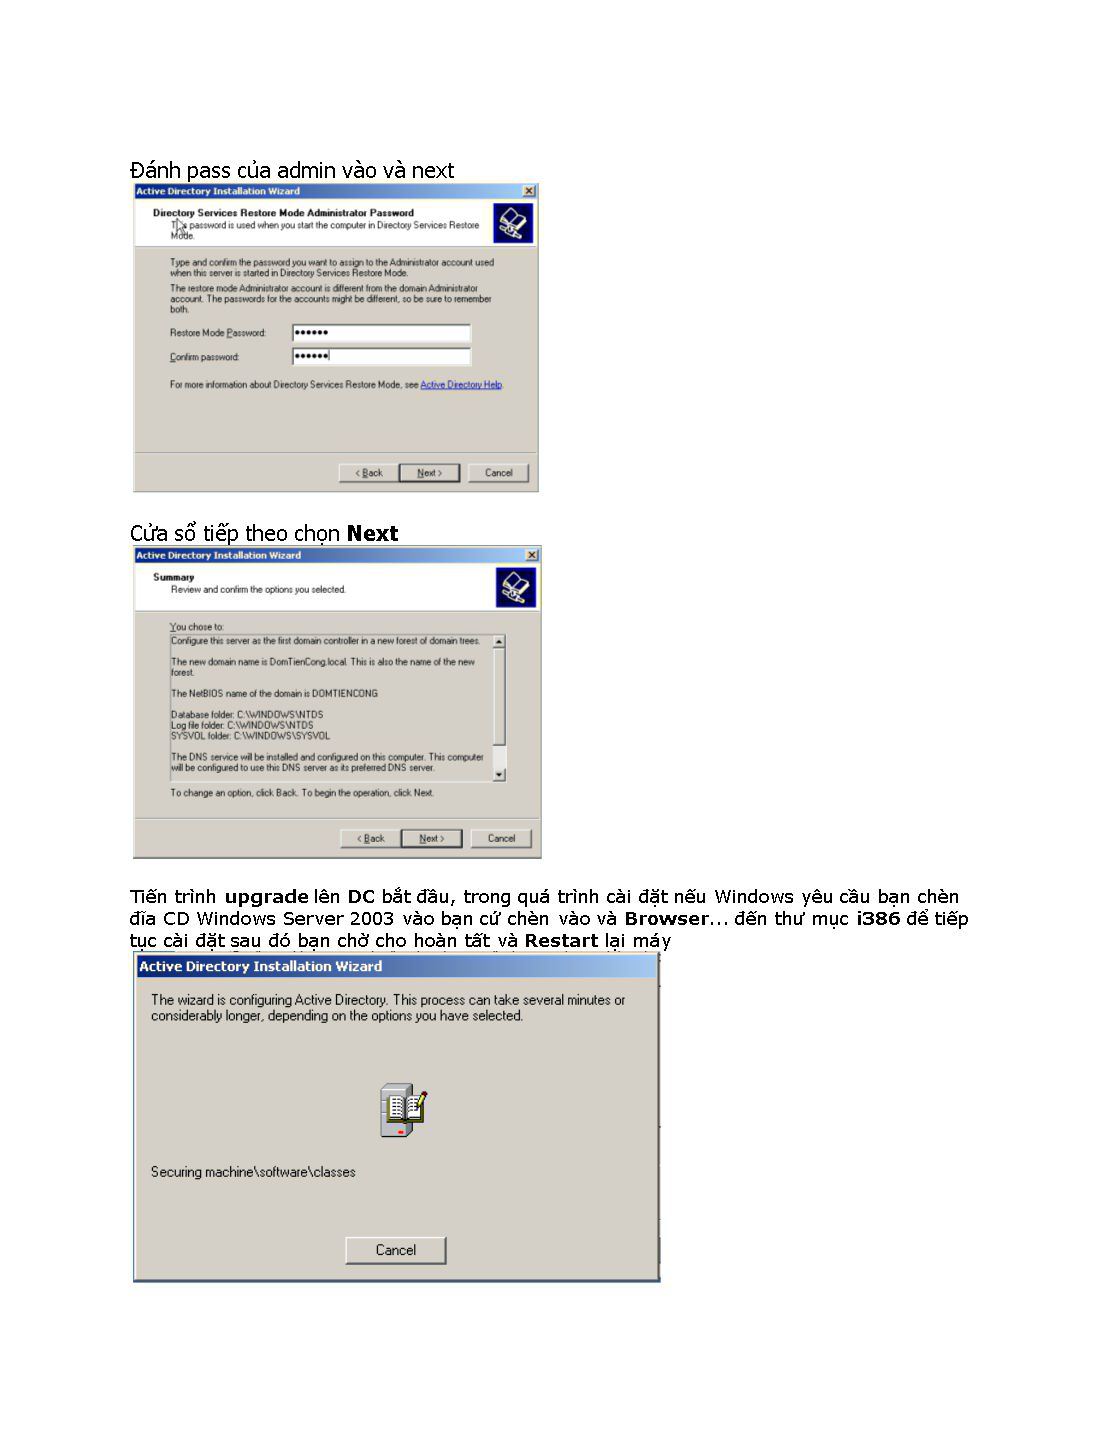 Đề tài Lap Windows server 2003 trang 6